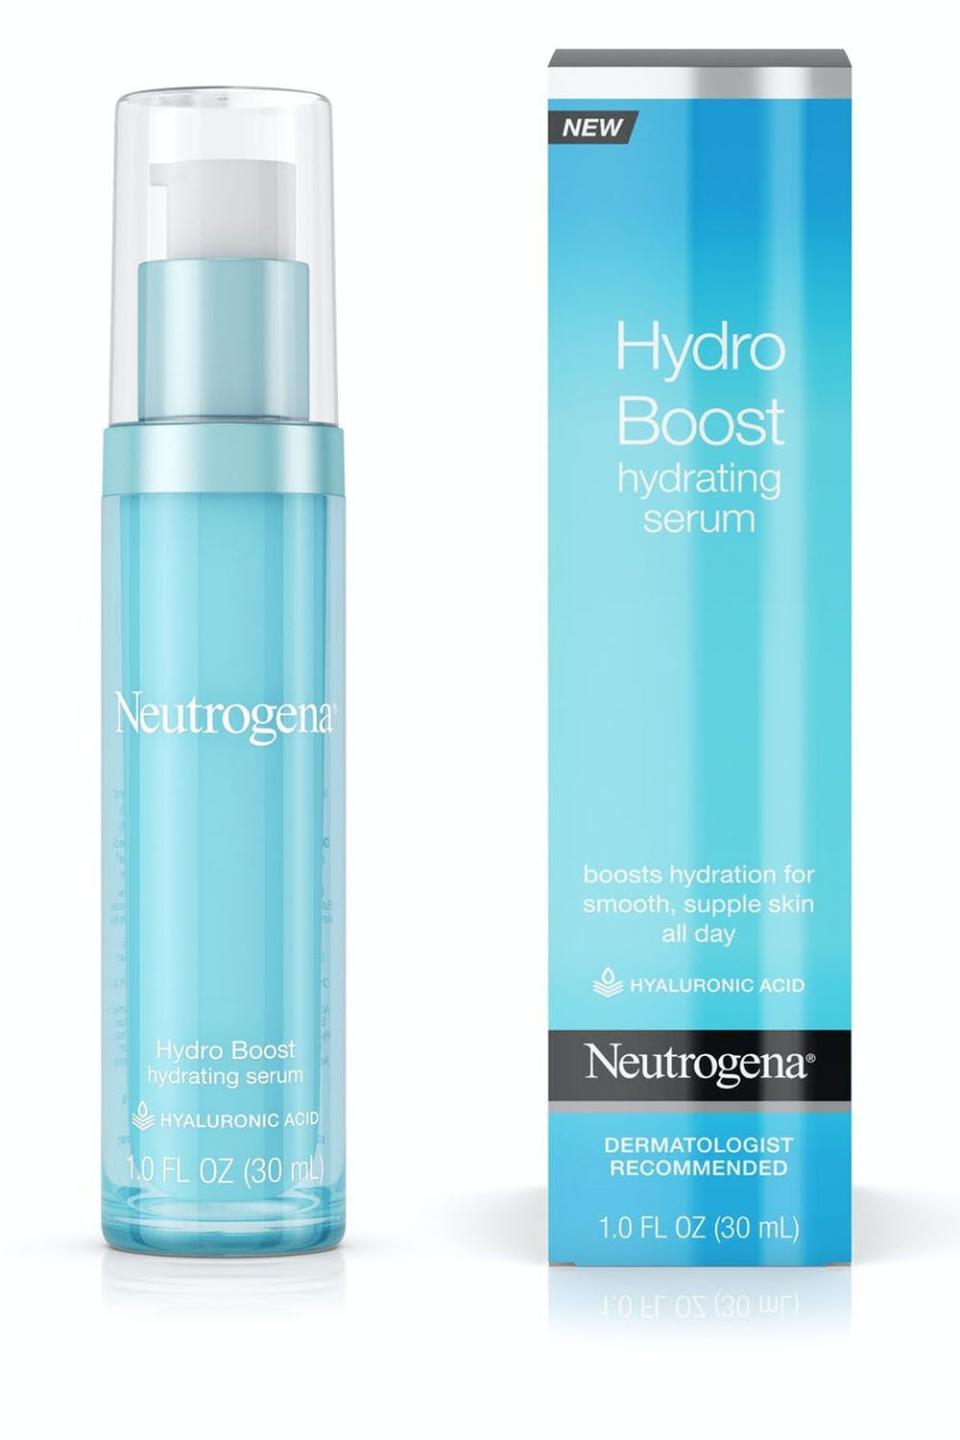 7) Neutrogena Hydro Boost Hydrating Hyaluronic Acid Serum